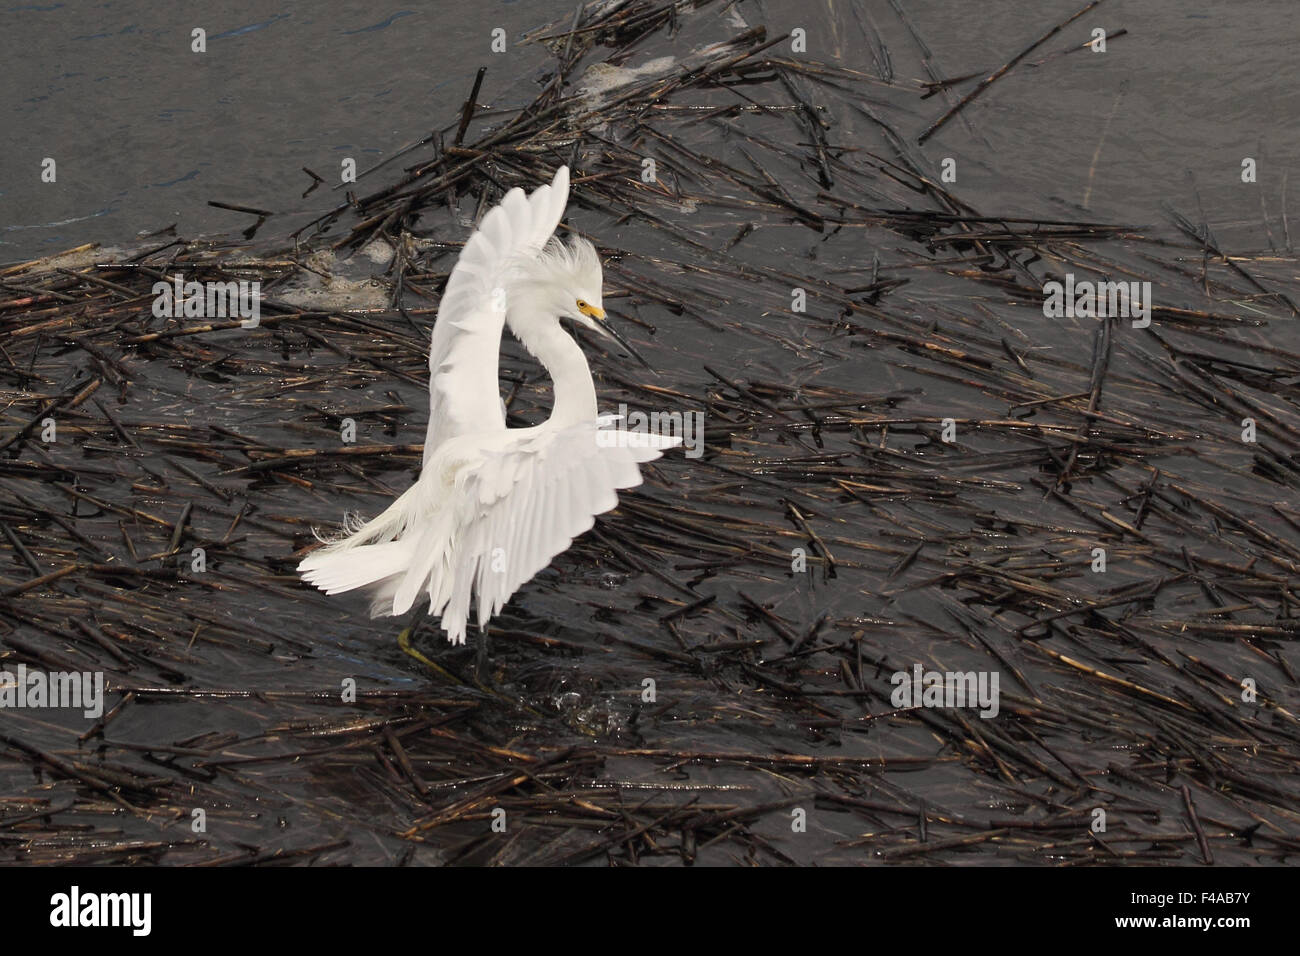 A Snowy egret struts across a salt marsh displaying its plumage. Stock Photo